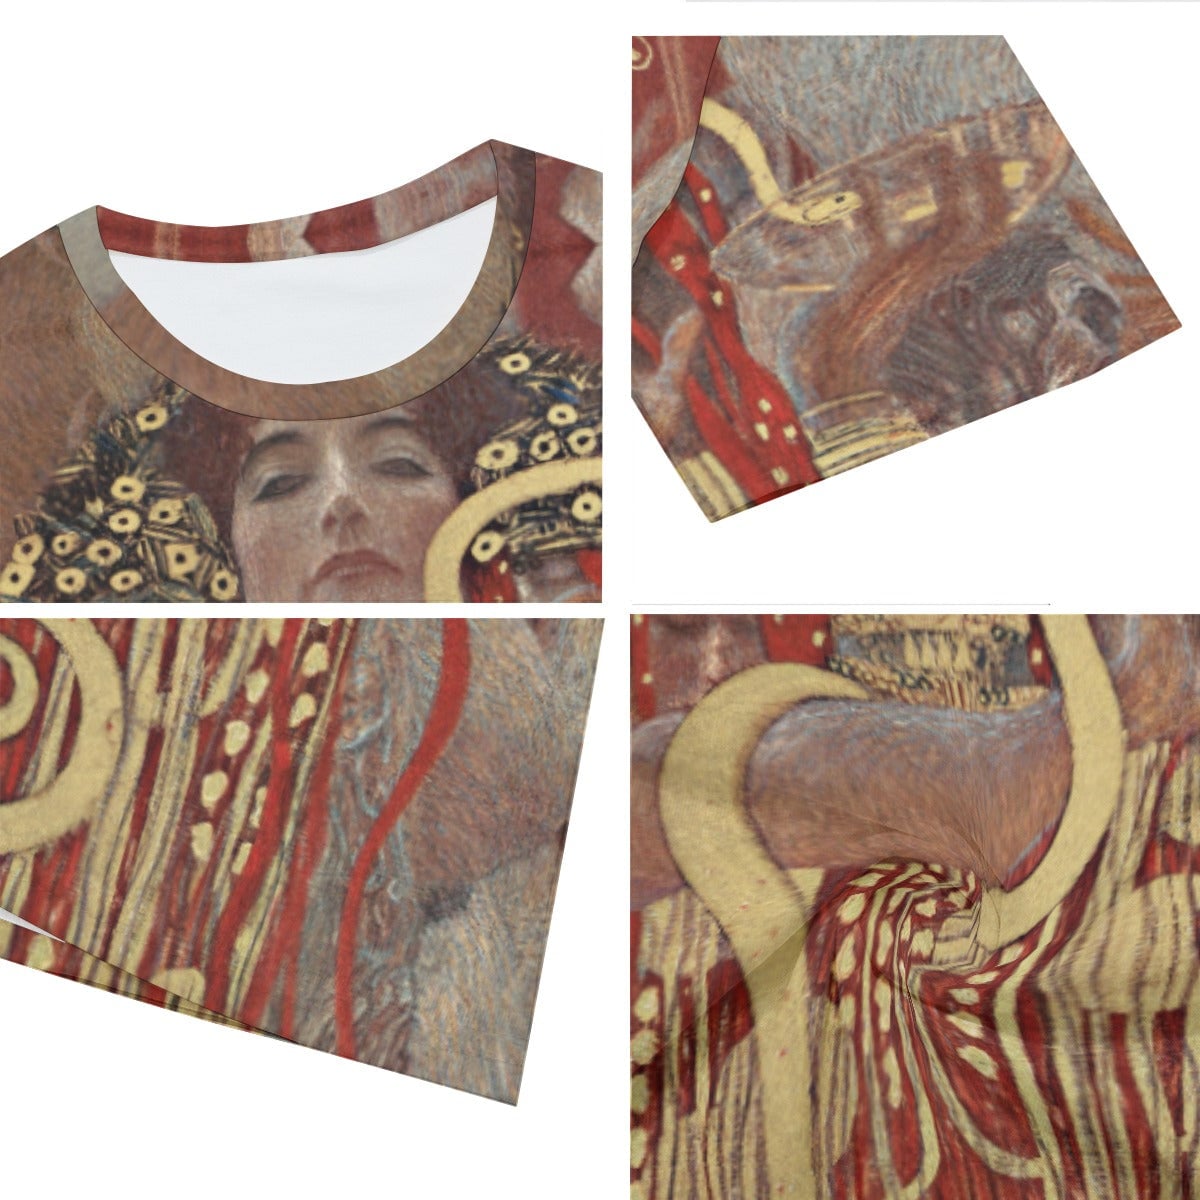 Gustav Klimt’s Hygieia T-Shirt - Famous Artwork Tee